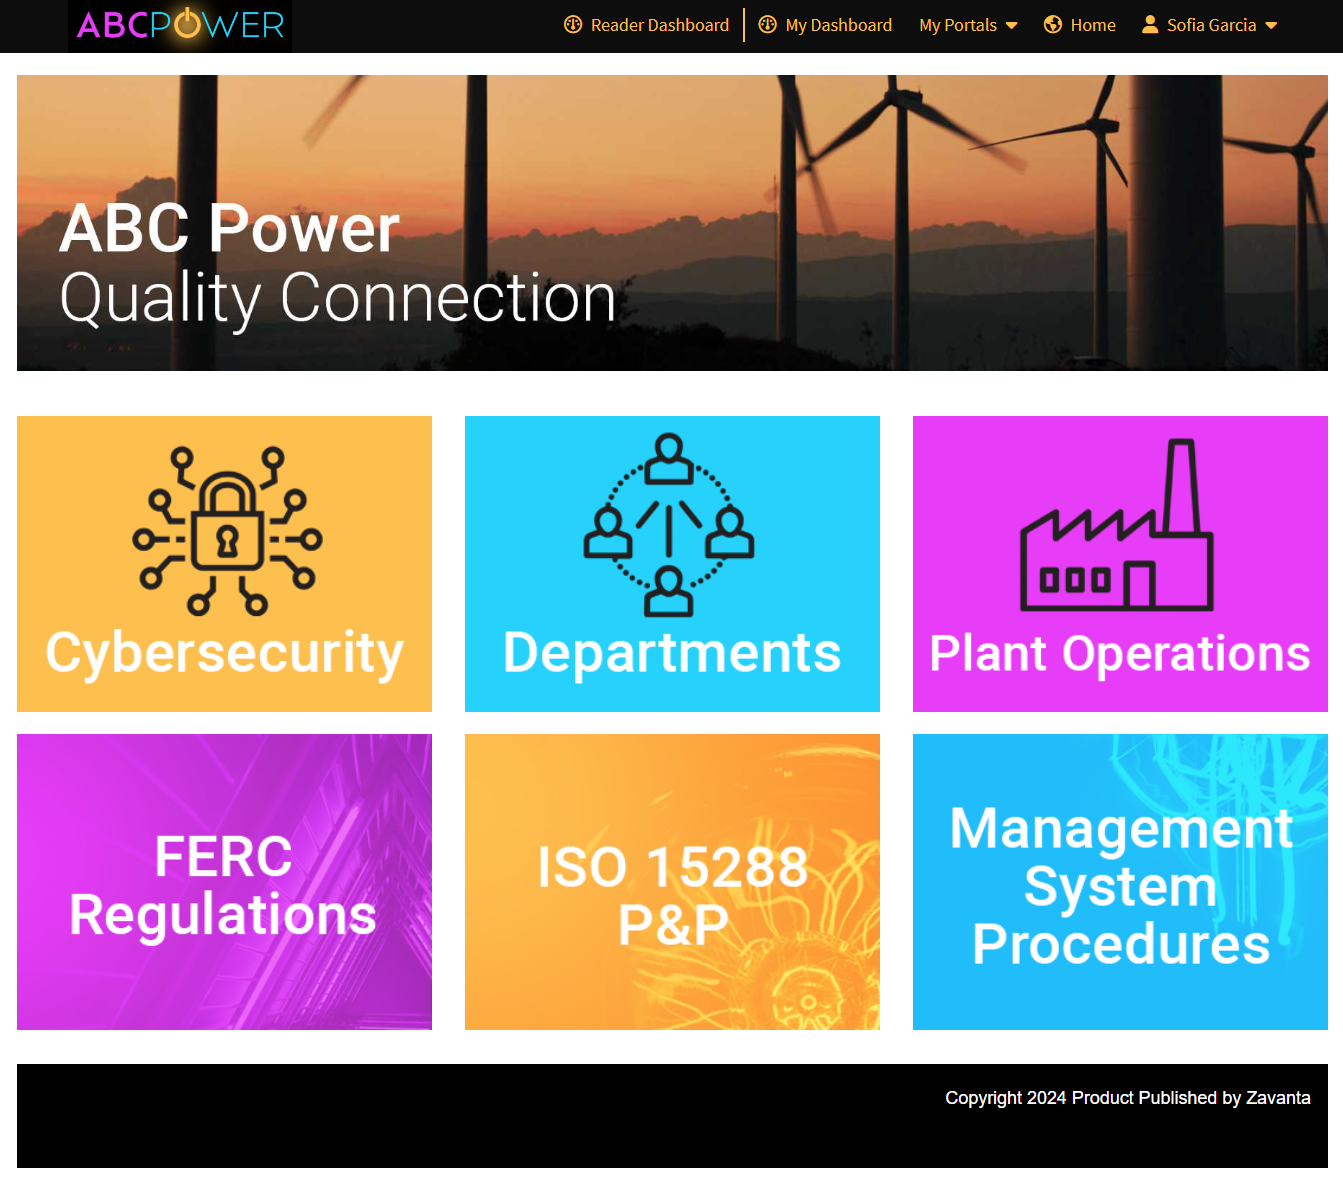 ABC Power Zavanta Portal mock up